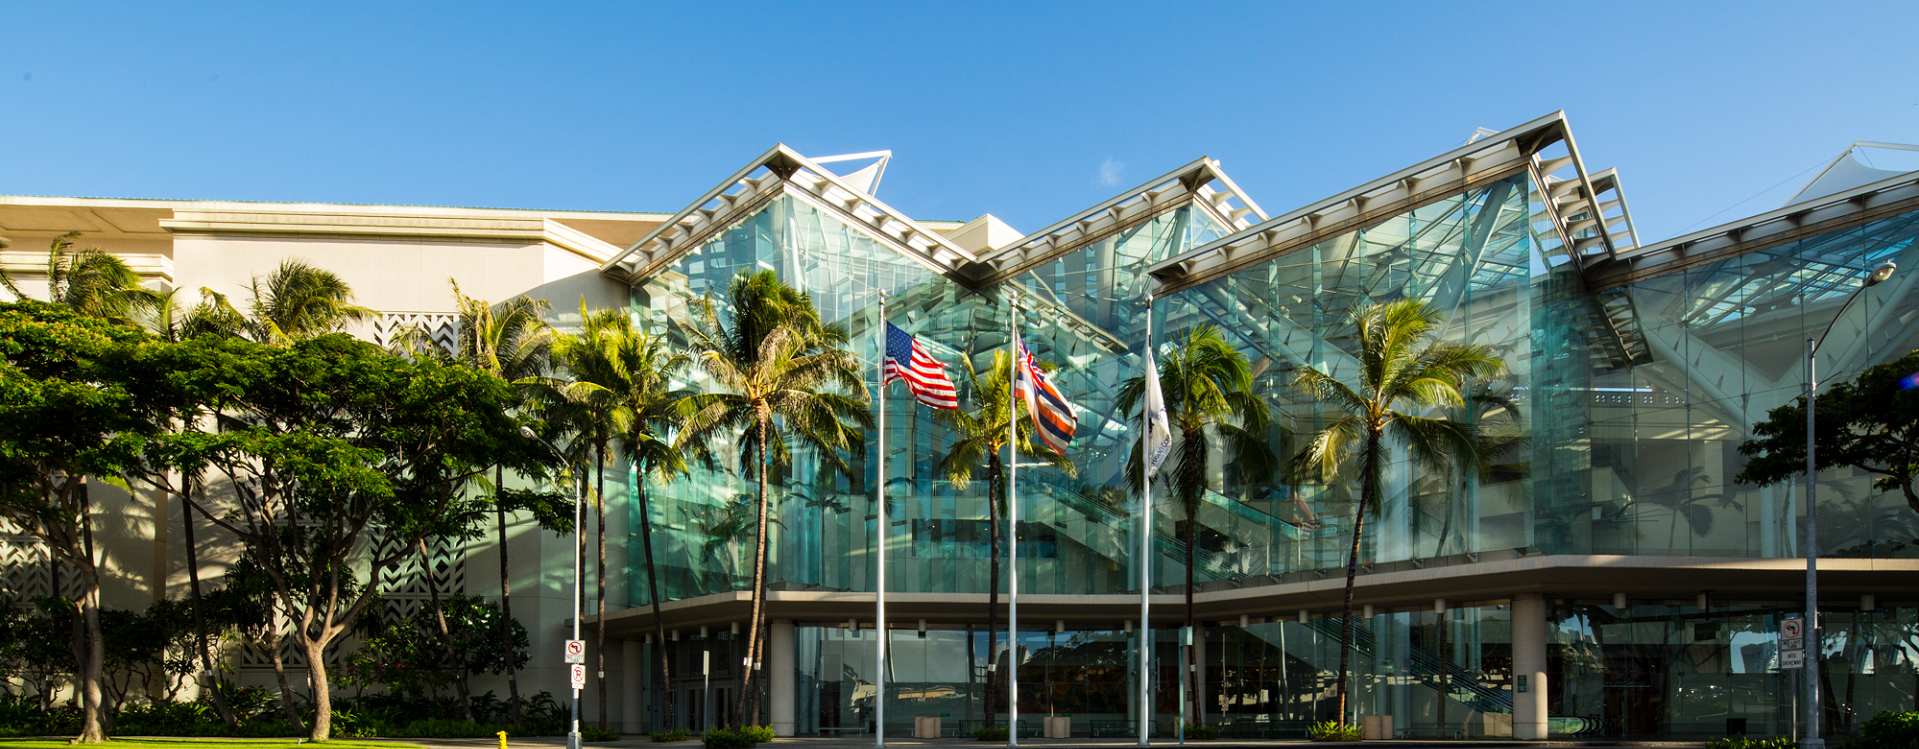 Hawai'i Convention Center